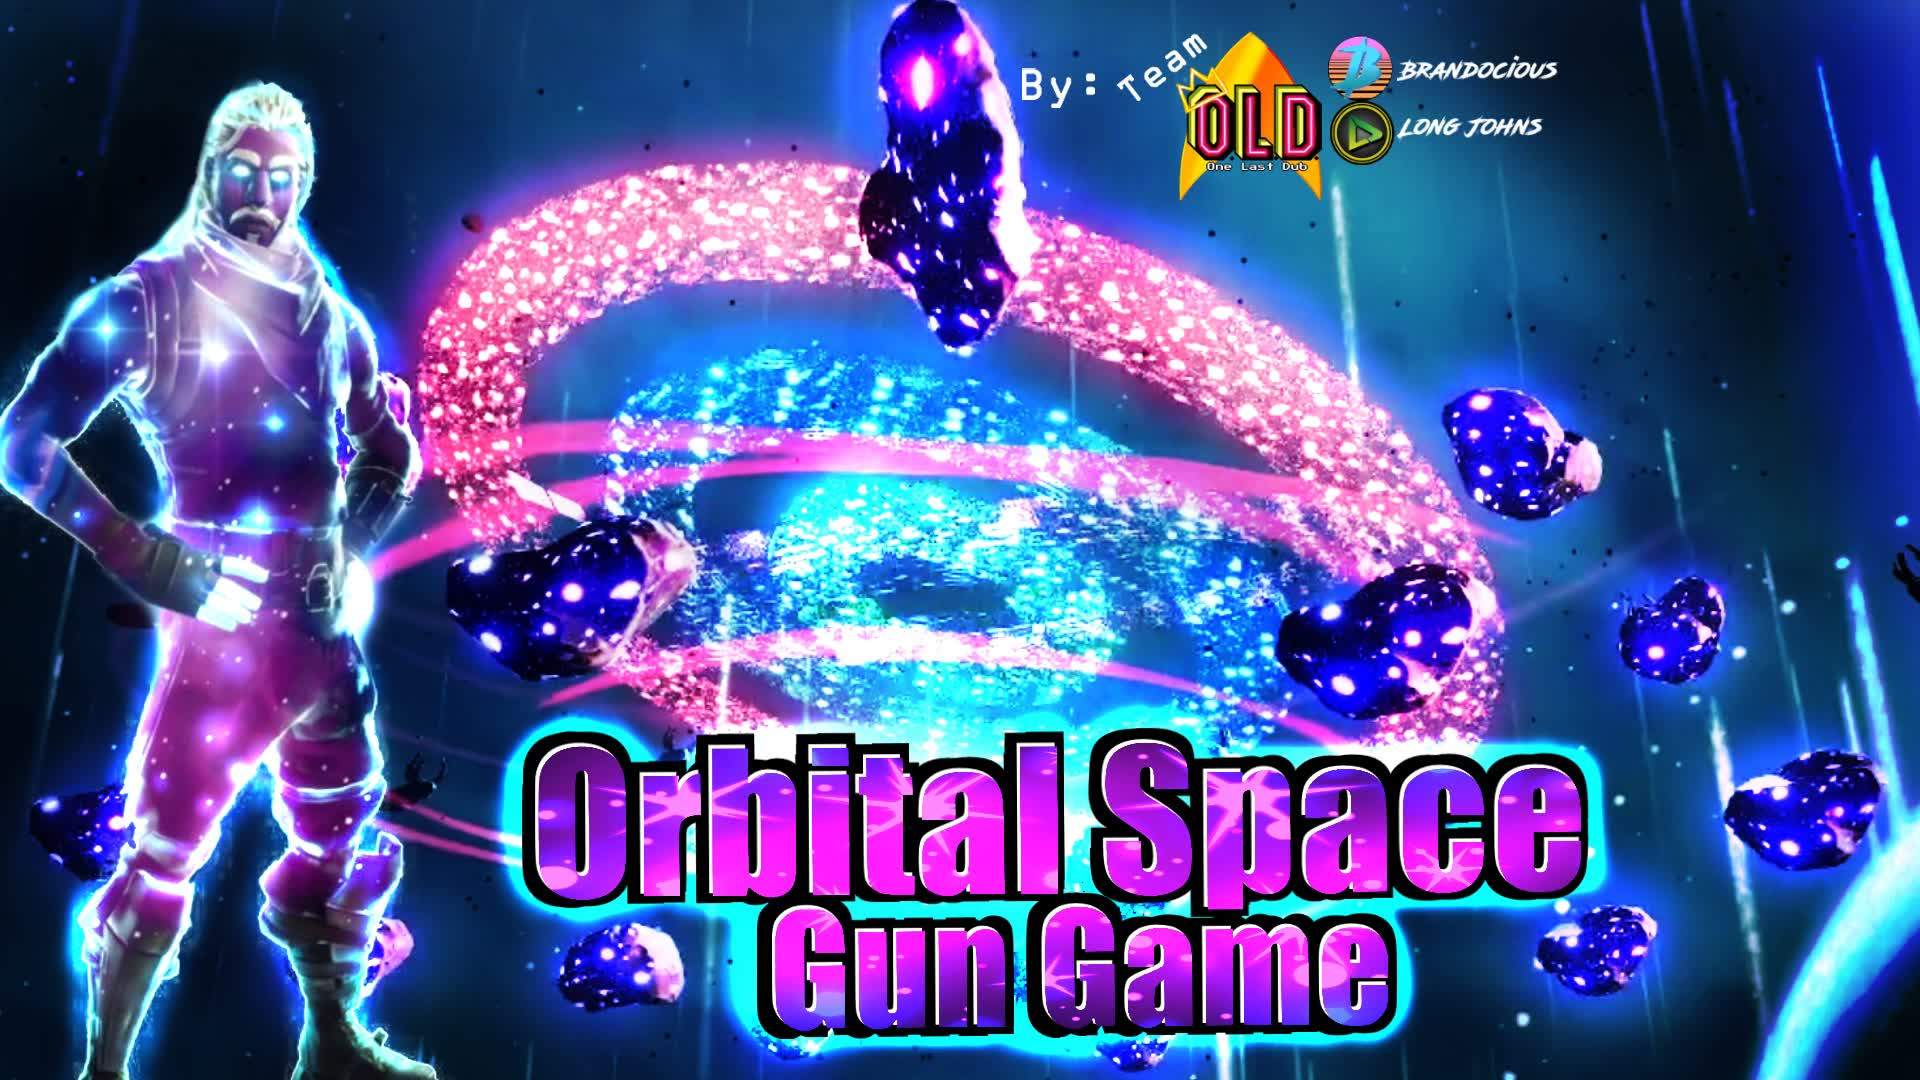 🛸 Orbital Space Gun Game 🛸